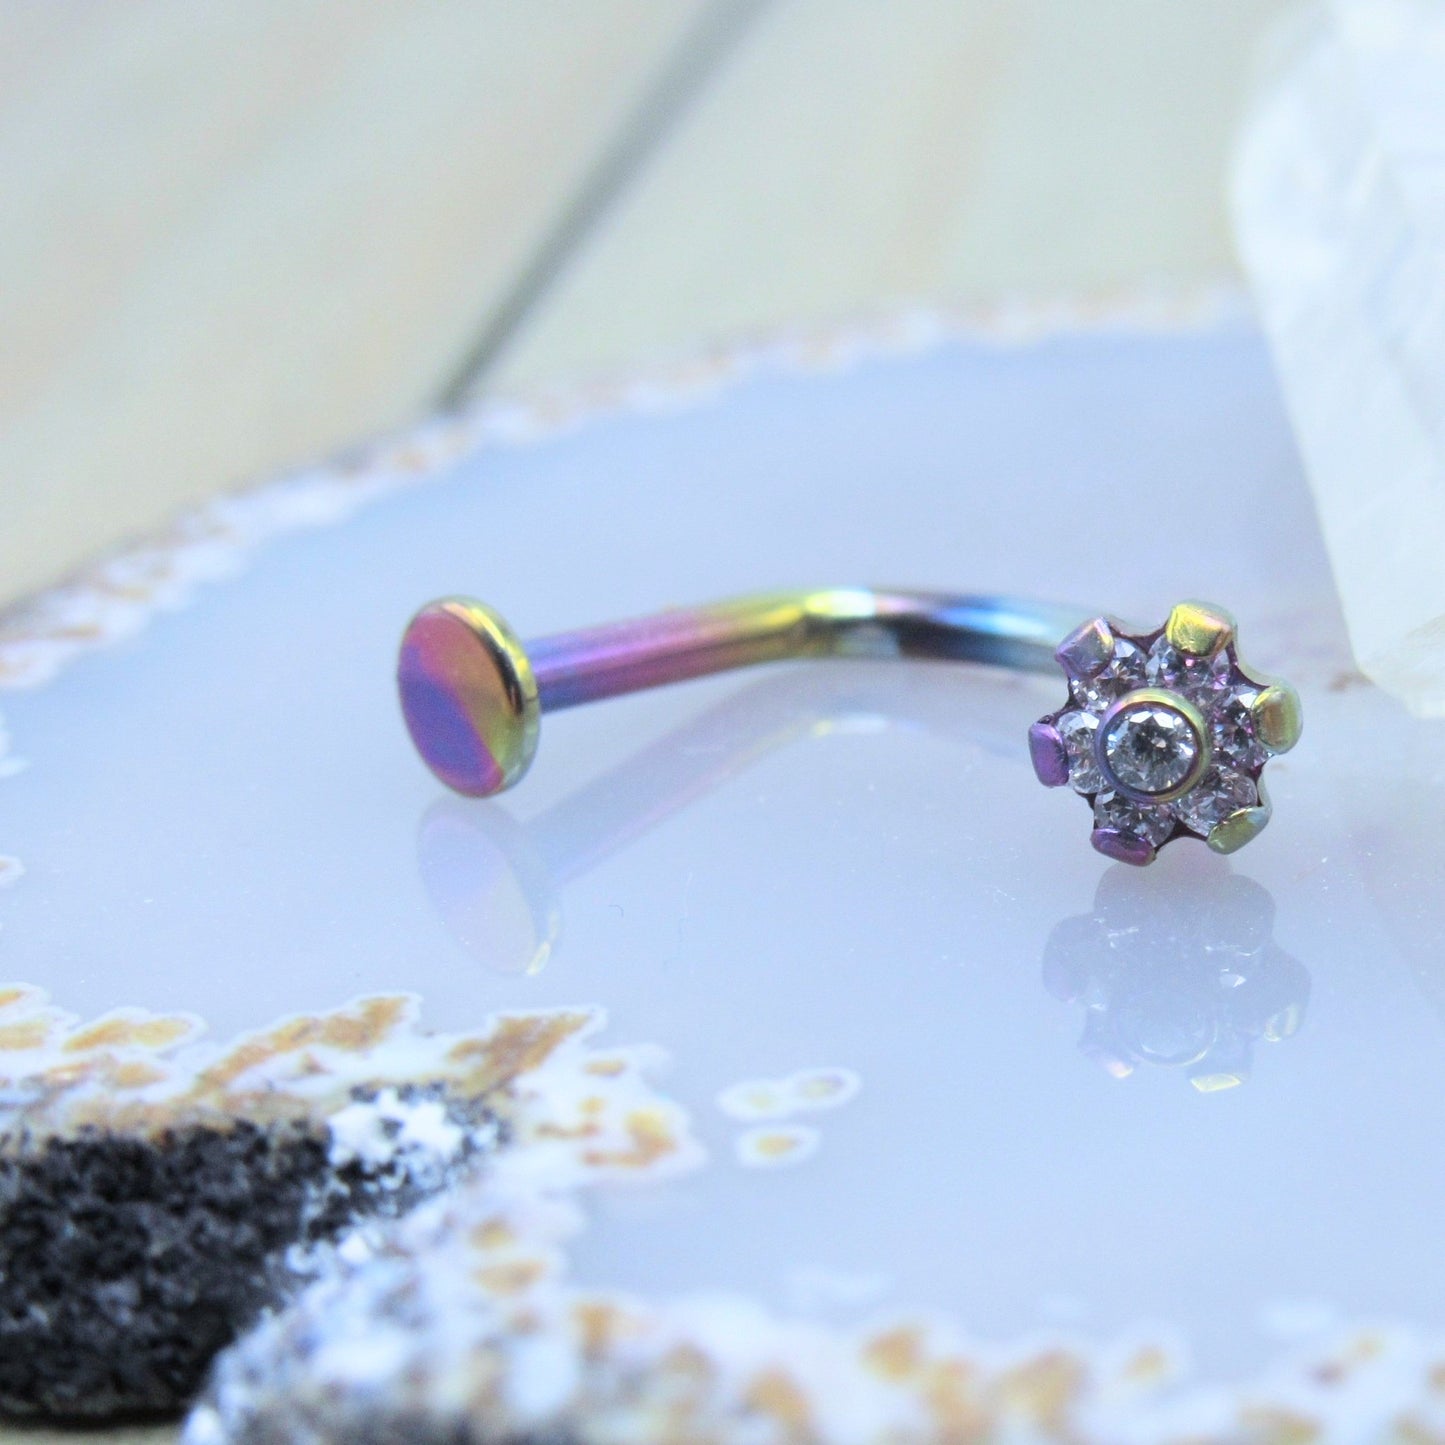 14g rainbow titanium anodized piercing barbell ring